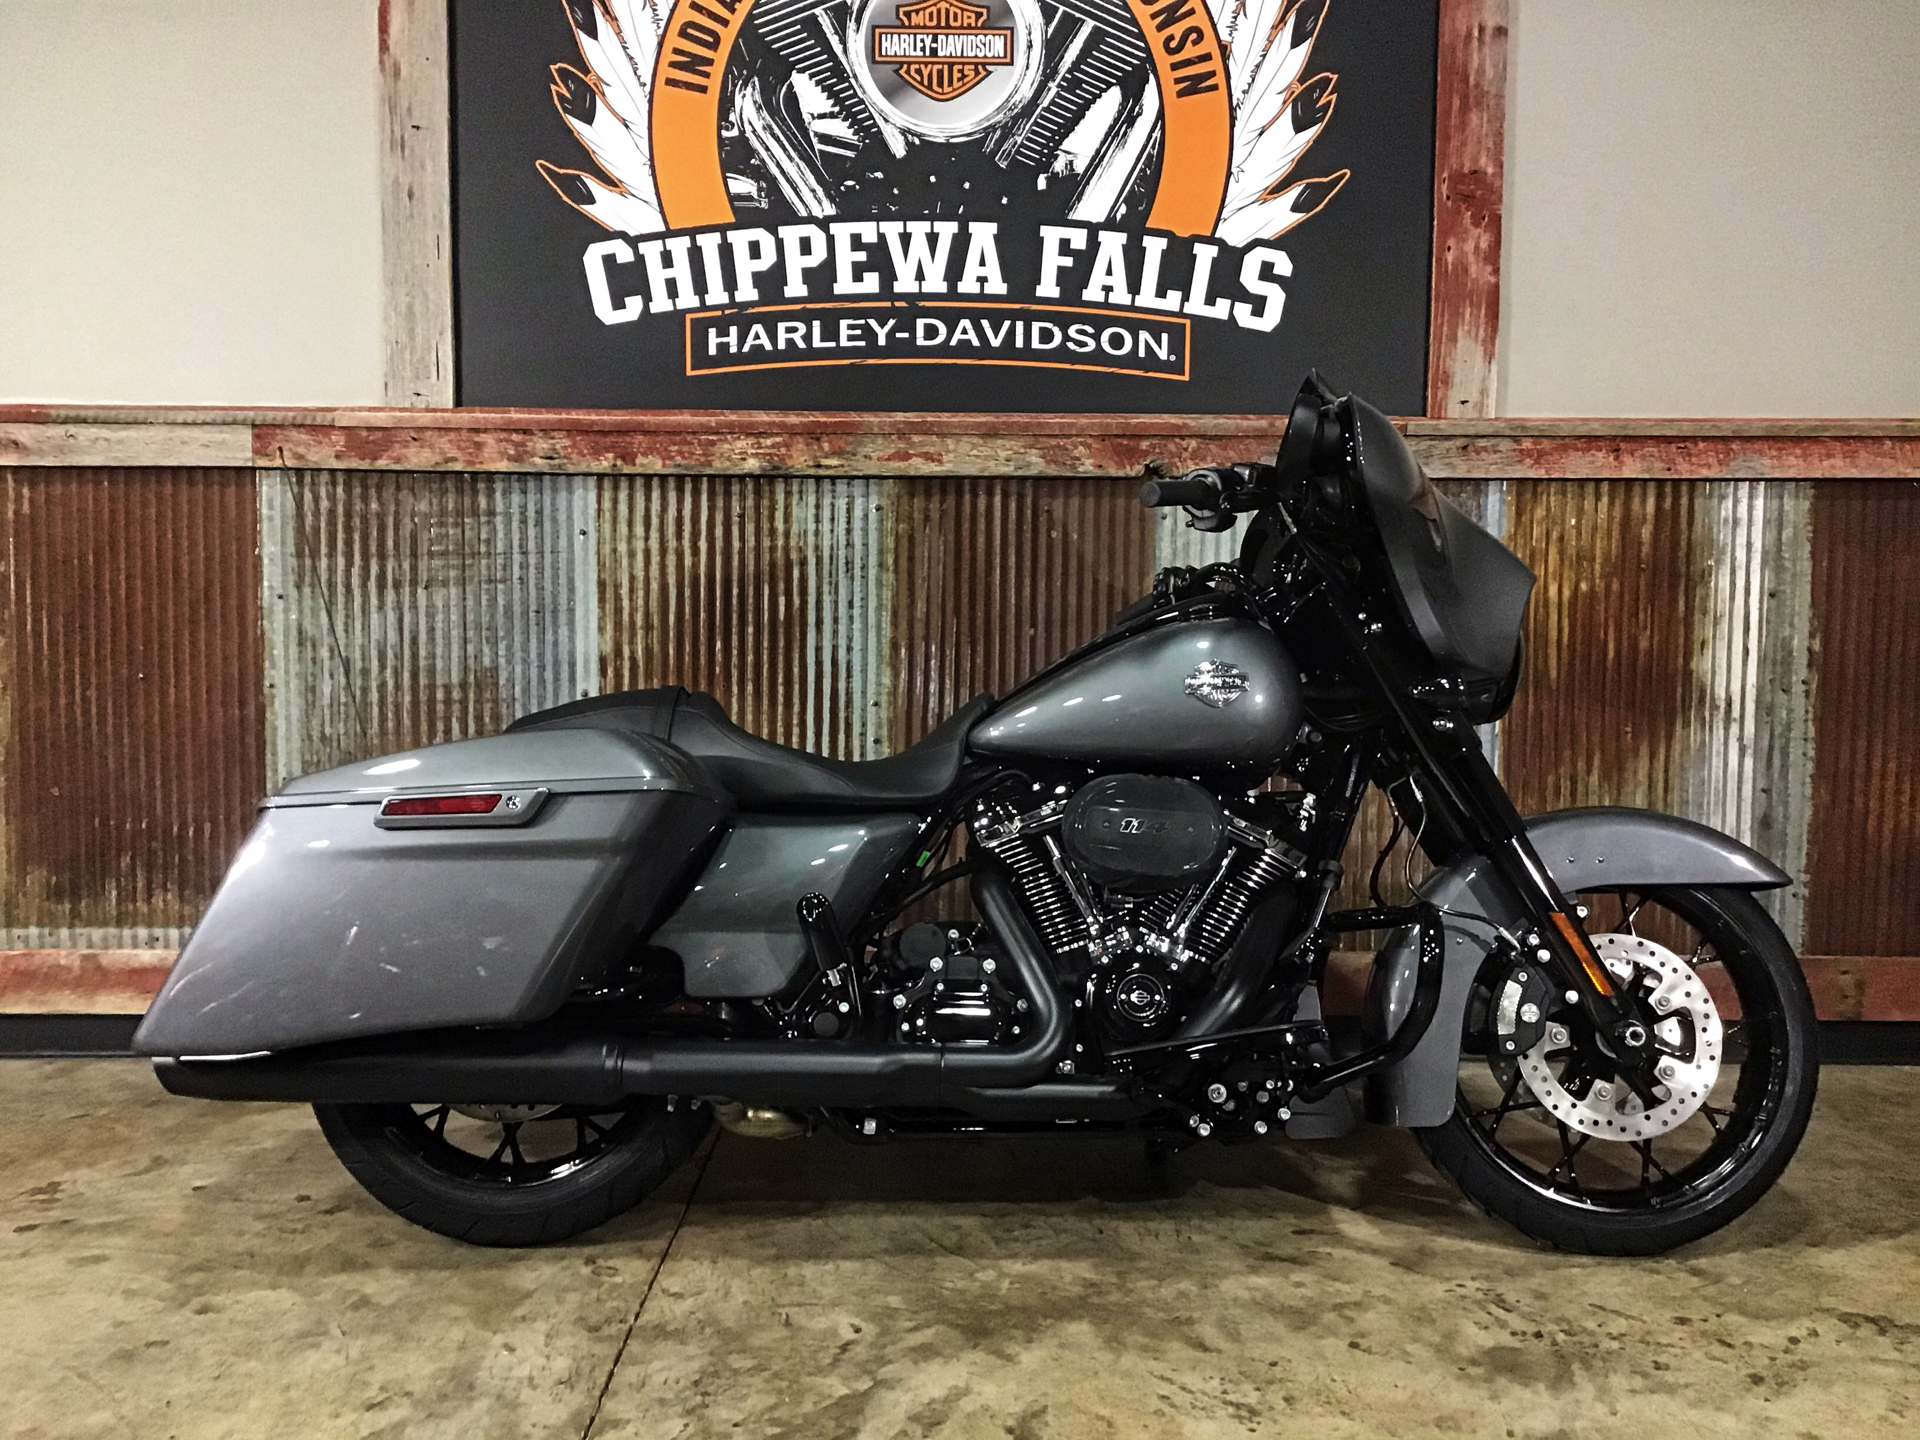 New 2021 Harley Davidson Street Glide Special Gauntlet Gray Metallic Black Pearl Option Motorcycles In Chippewa Falls Wi Fl608433